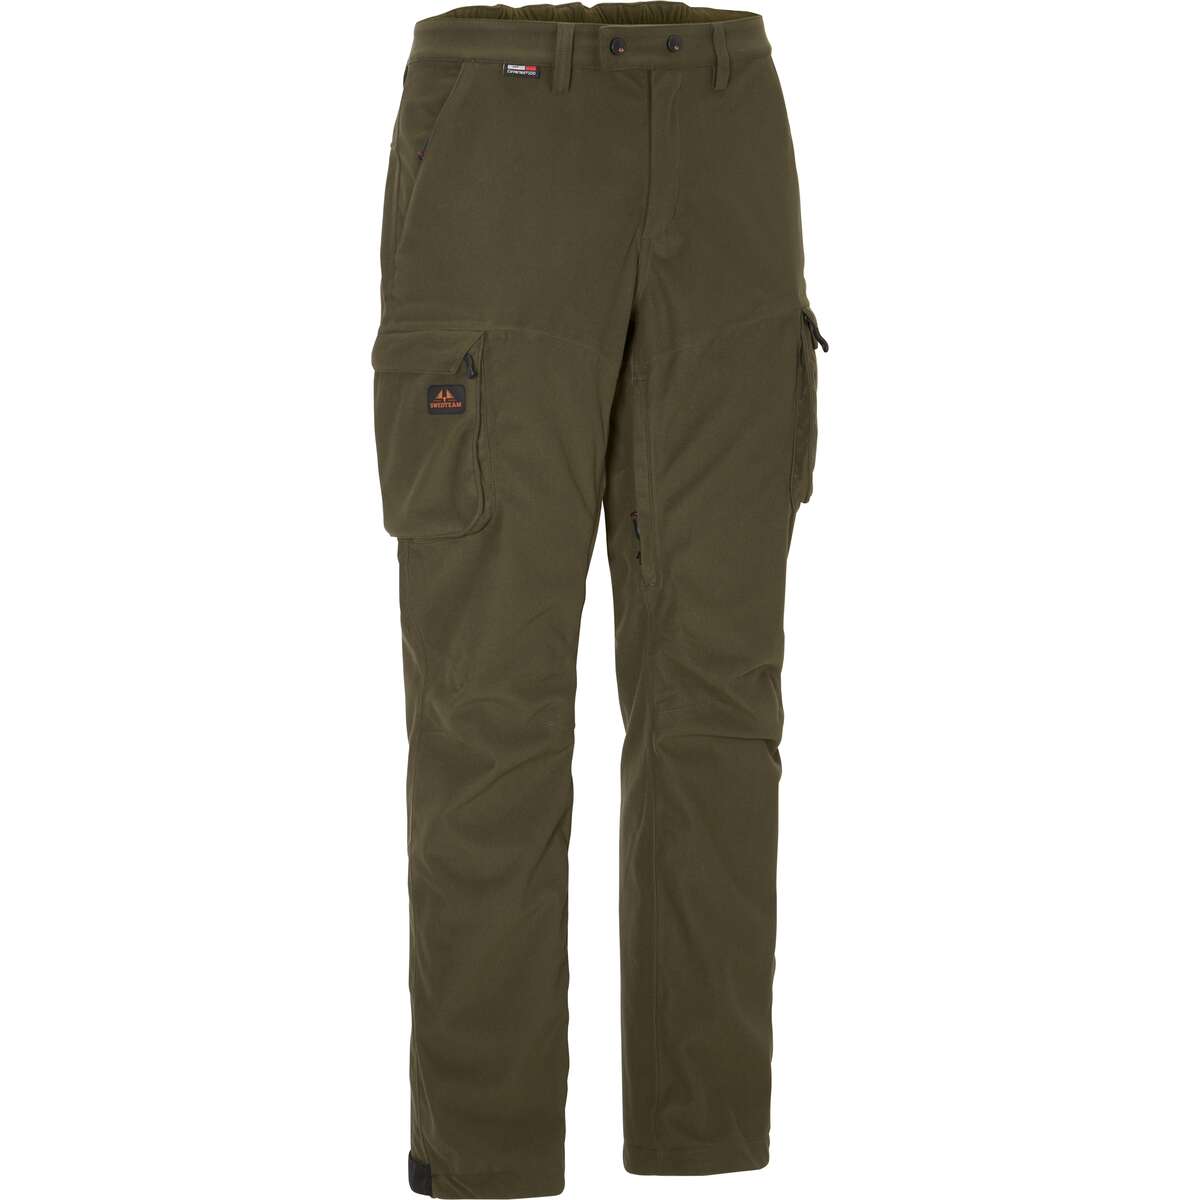 Swedteam Alpha Pro 3-L Hunting trouser